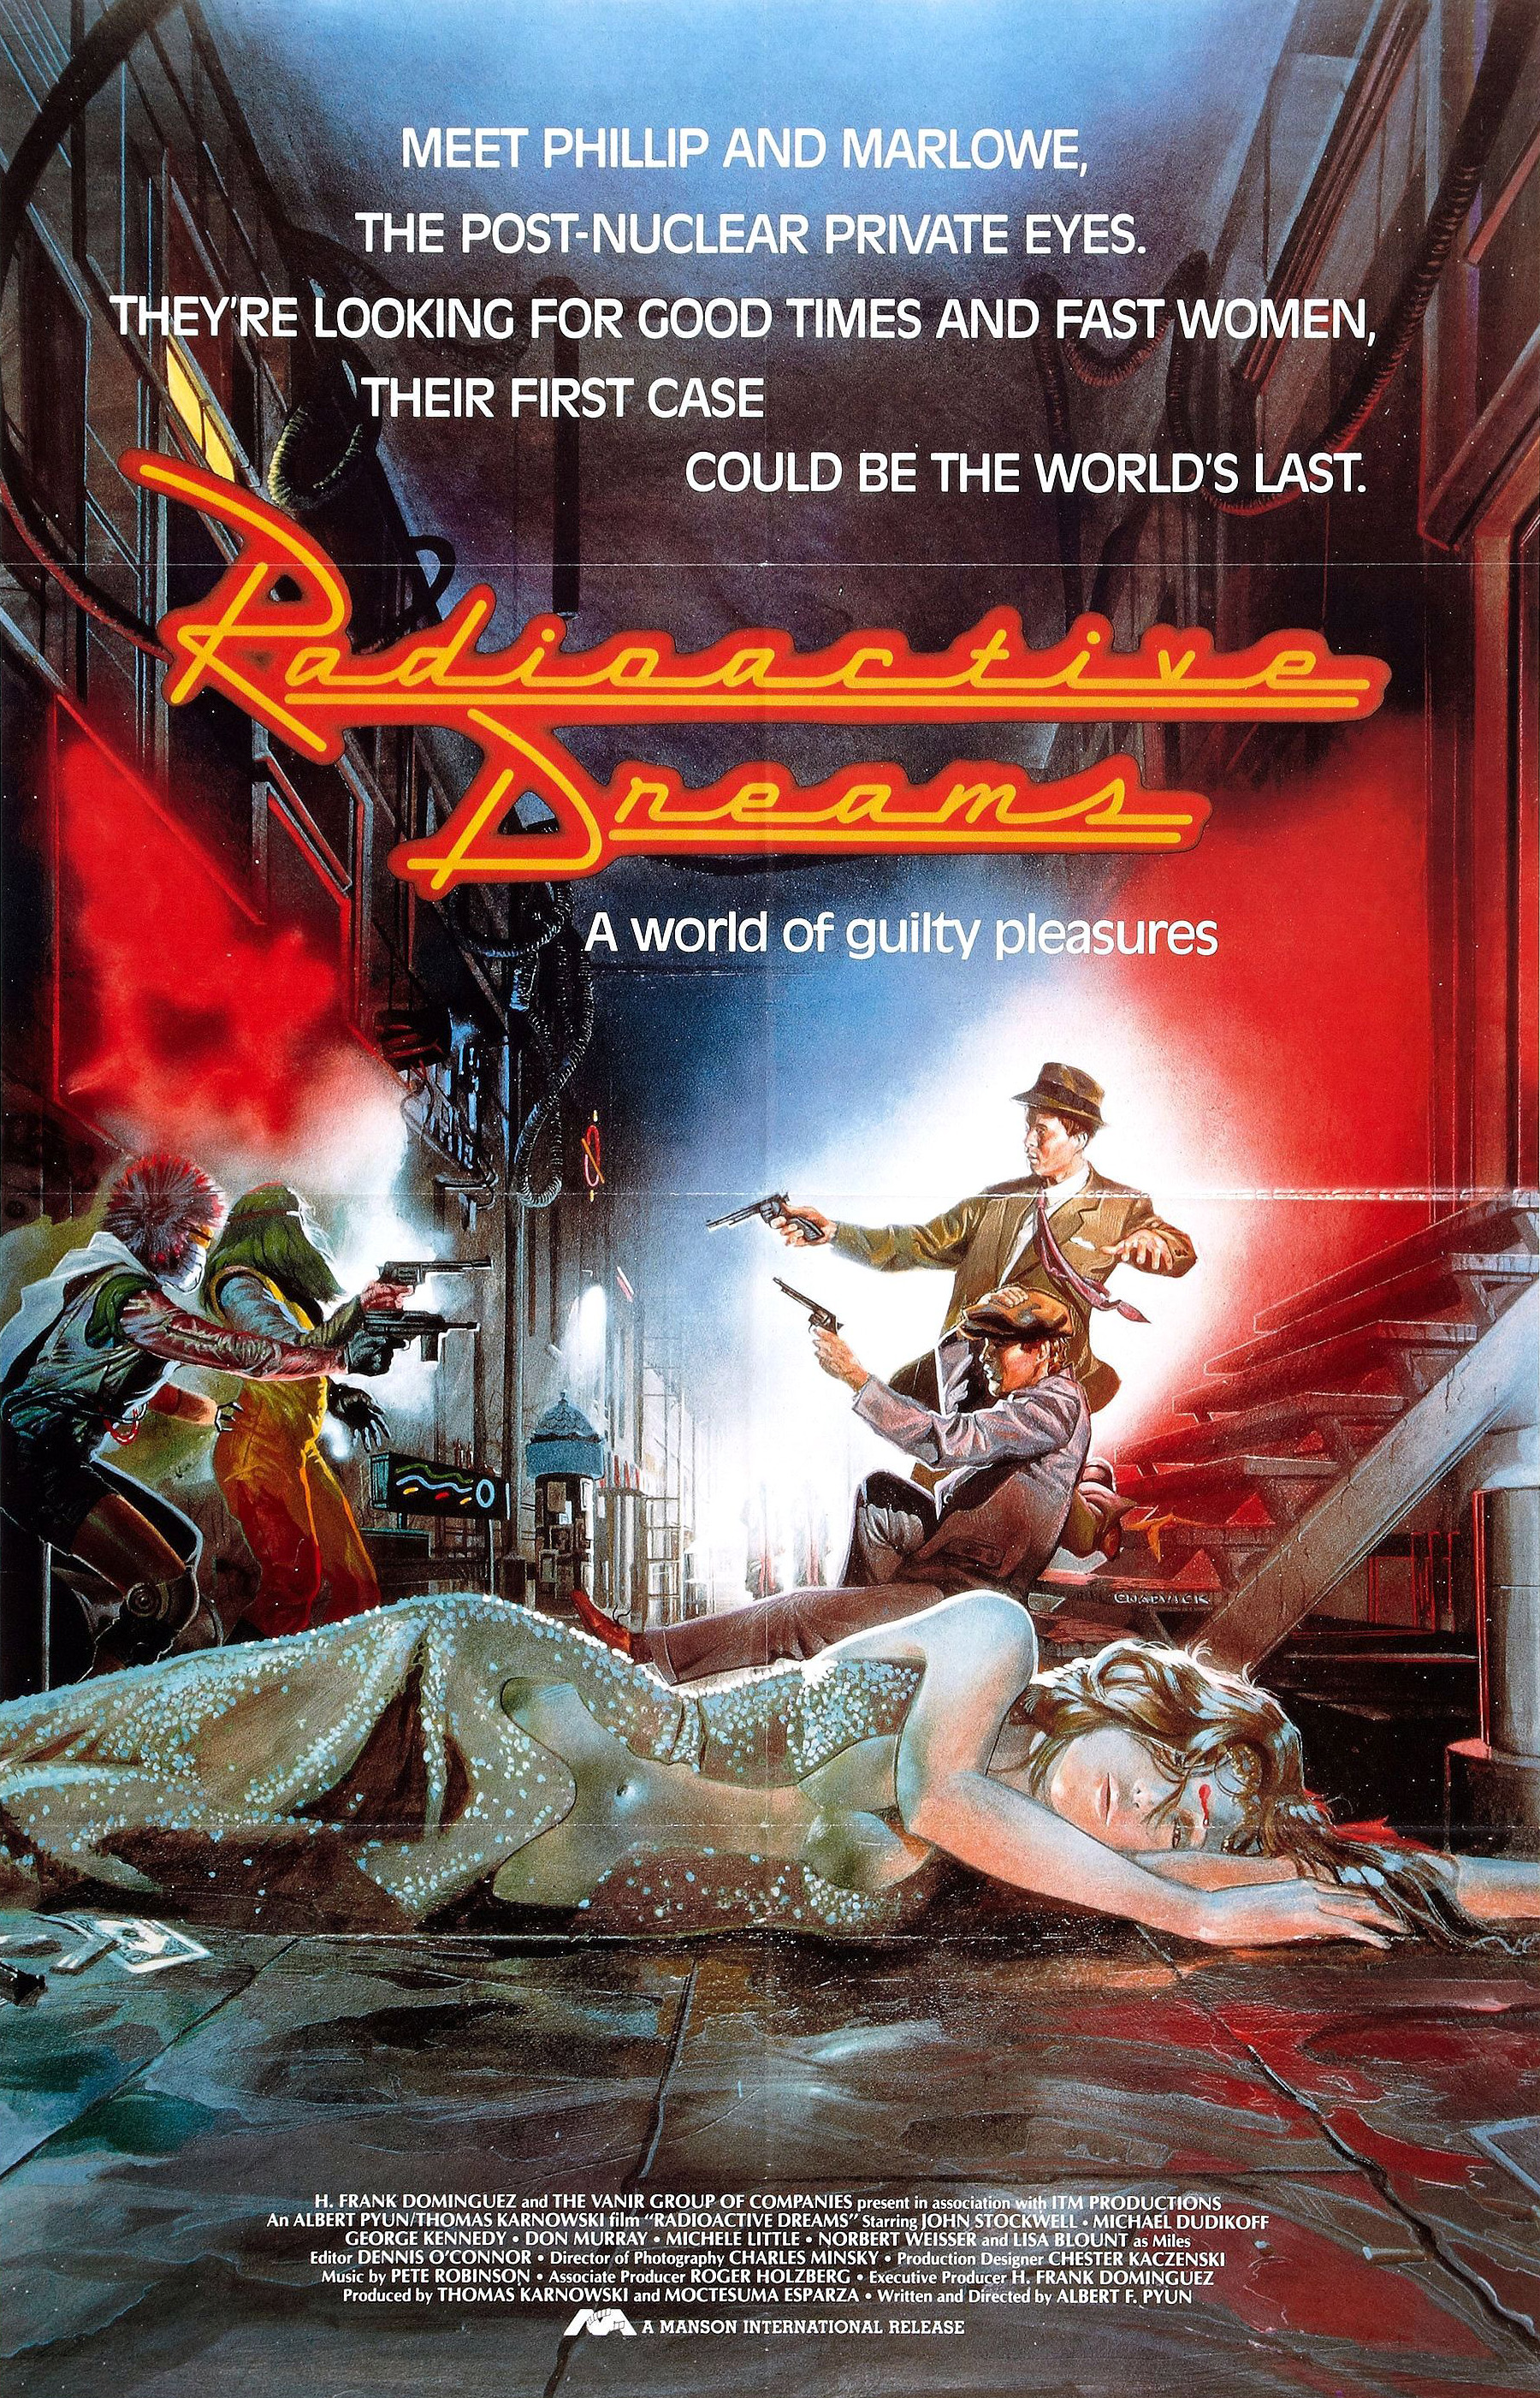 Radioactive Dreams (1985) starring John Stockwell on DVD on DVD